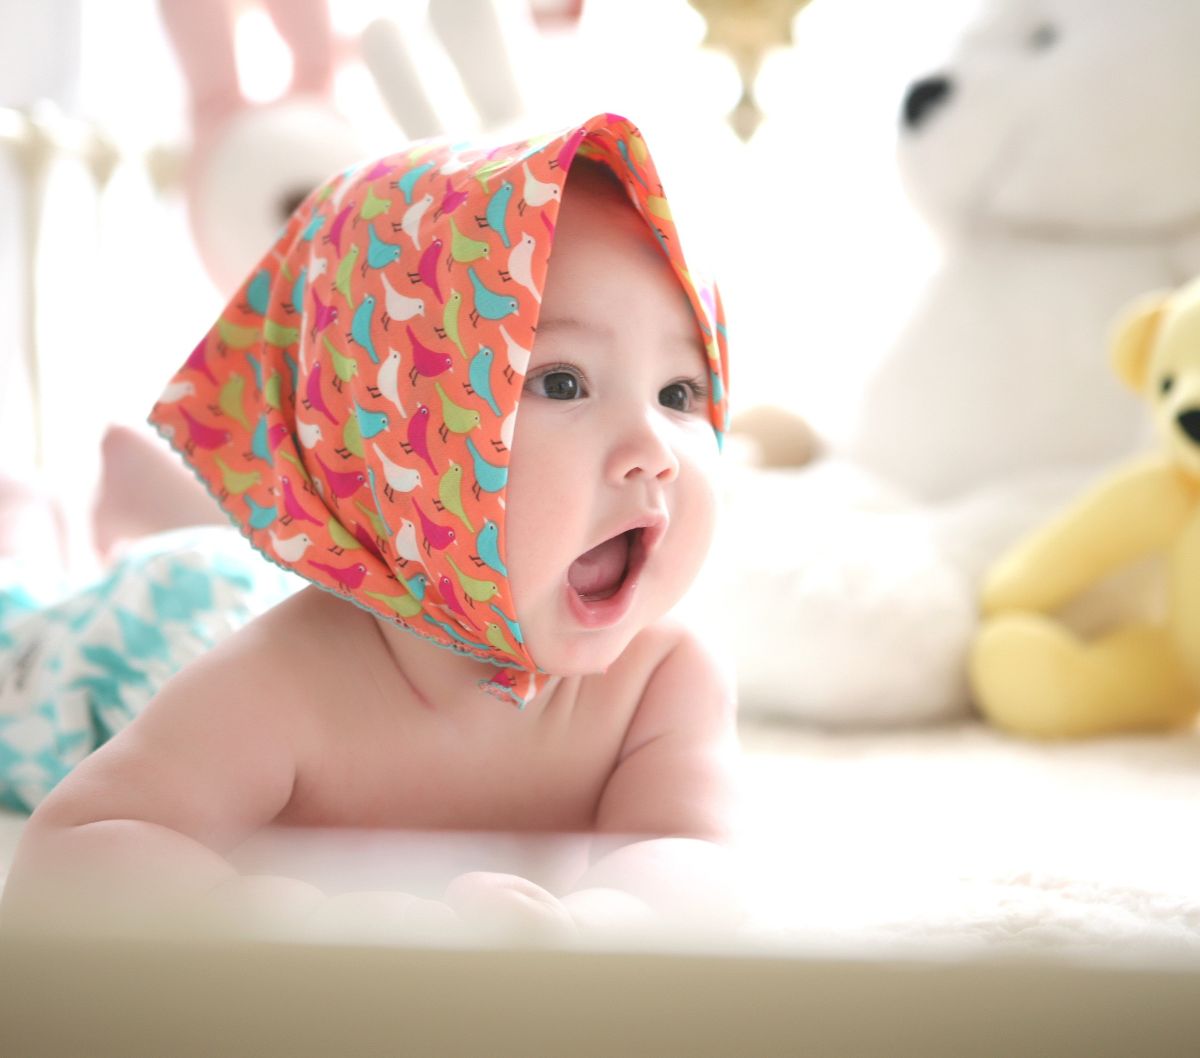 Gumoh adalah proses alami ketika bayi mengeluarkan sebagian kecil atau sedikit isi lambungnya setelah makan. Gumoh biasanya lebih lembut, lambat, dan tidak disertai dengan suara muntah yang keras.